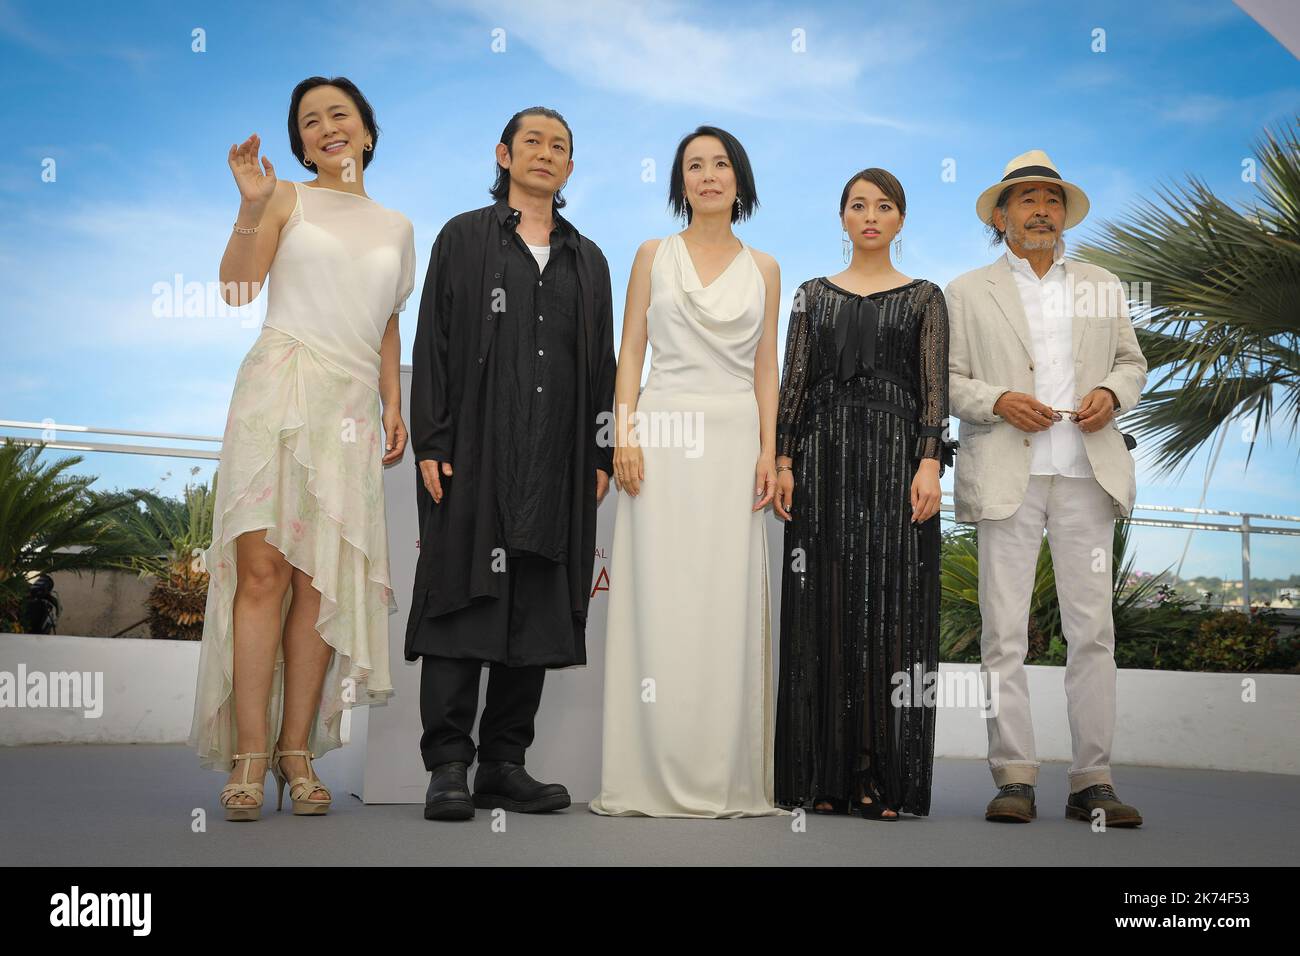 Photo:  photocall du film HIKARI / VERS LA LUMIERE / RADIANCE (Japon - France) [En CompÃ©tition]  En prÃ©sence de la rÃ©alisatrice Naomi KAWASE (Japon). Des actrices Missuzu KANNO & Ayame MISAKI. Et des acteurs Tatsuya FUJI & Masatoshi NAGASE.   70th annual Cannes Film Festival in Cannes, France, May 2017. The film festival will run from 17 to 28 May. Stock Photo